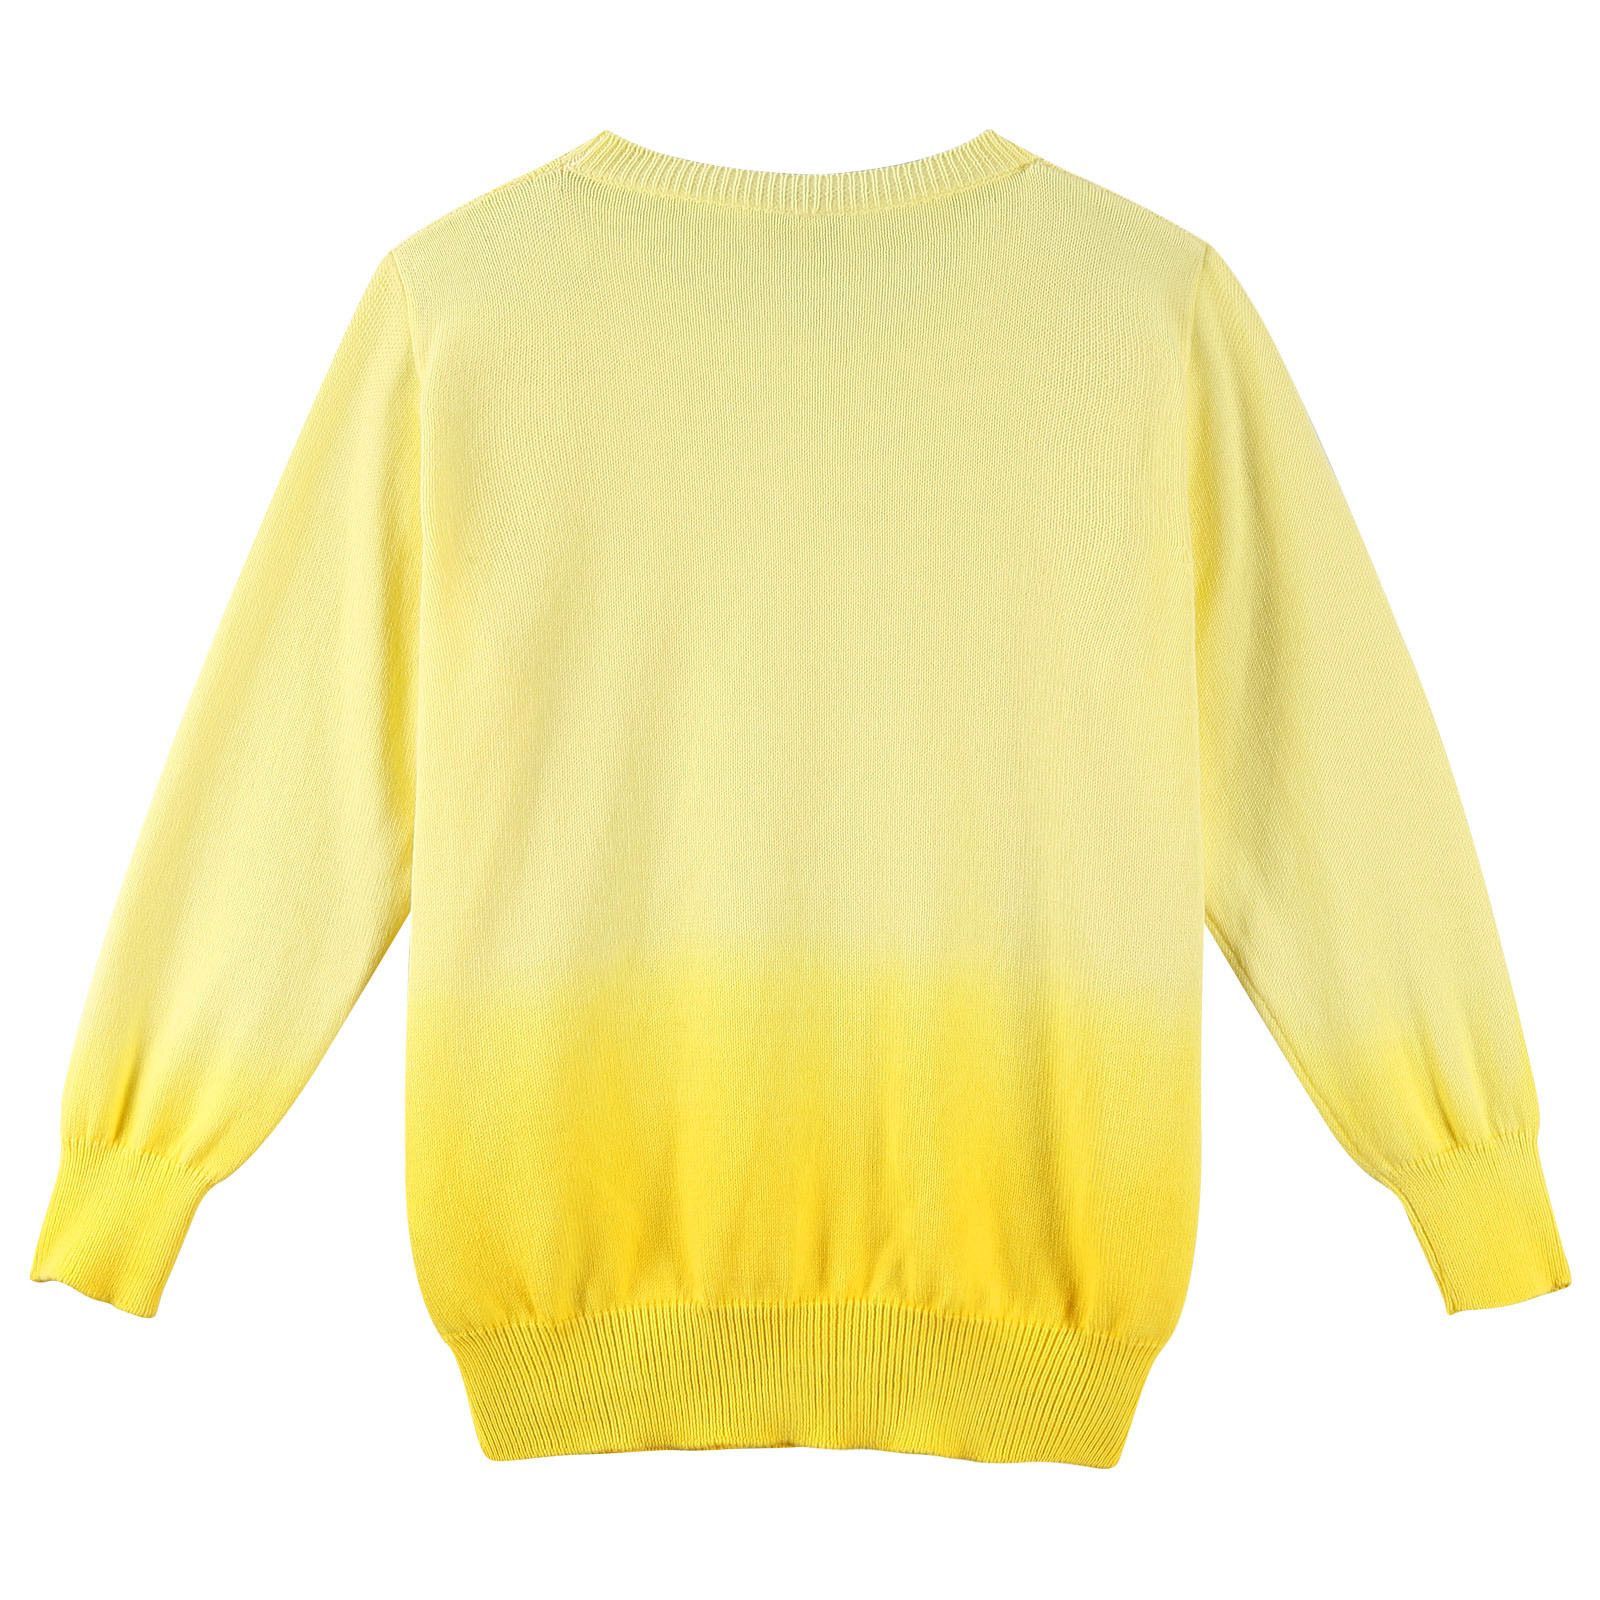 Boys Yellow Knitted Cotton Jersey Sweater - CÉMAROSE | Children's Fashion Store - 2